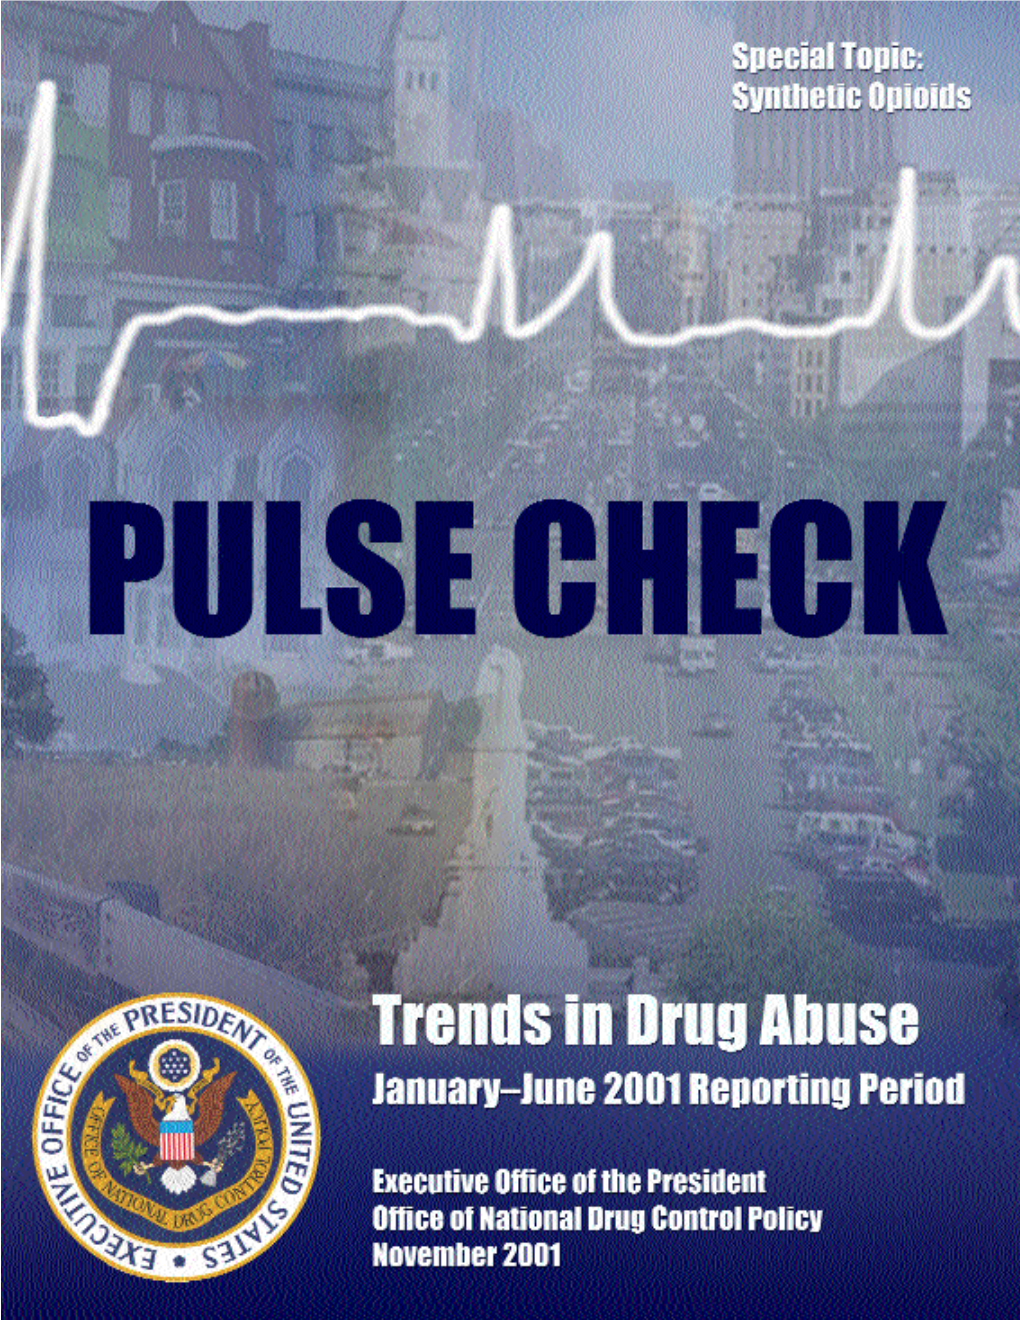 Pulse Check: Trends in Drug Abuse November 2001